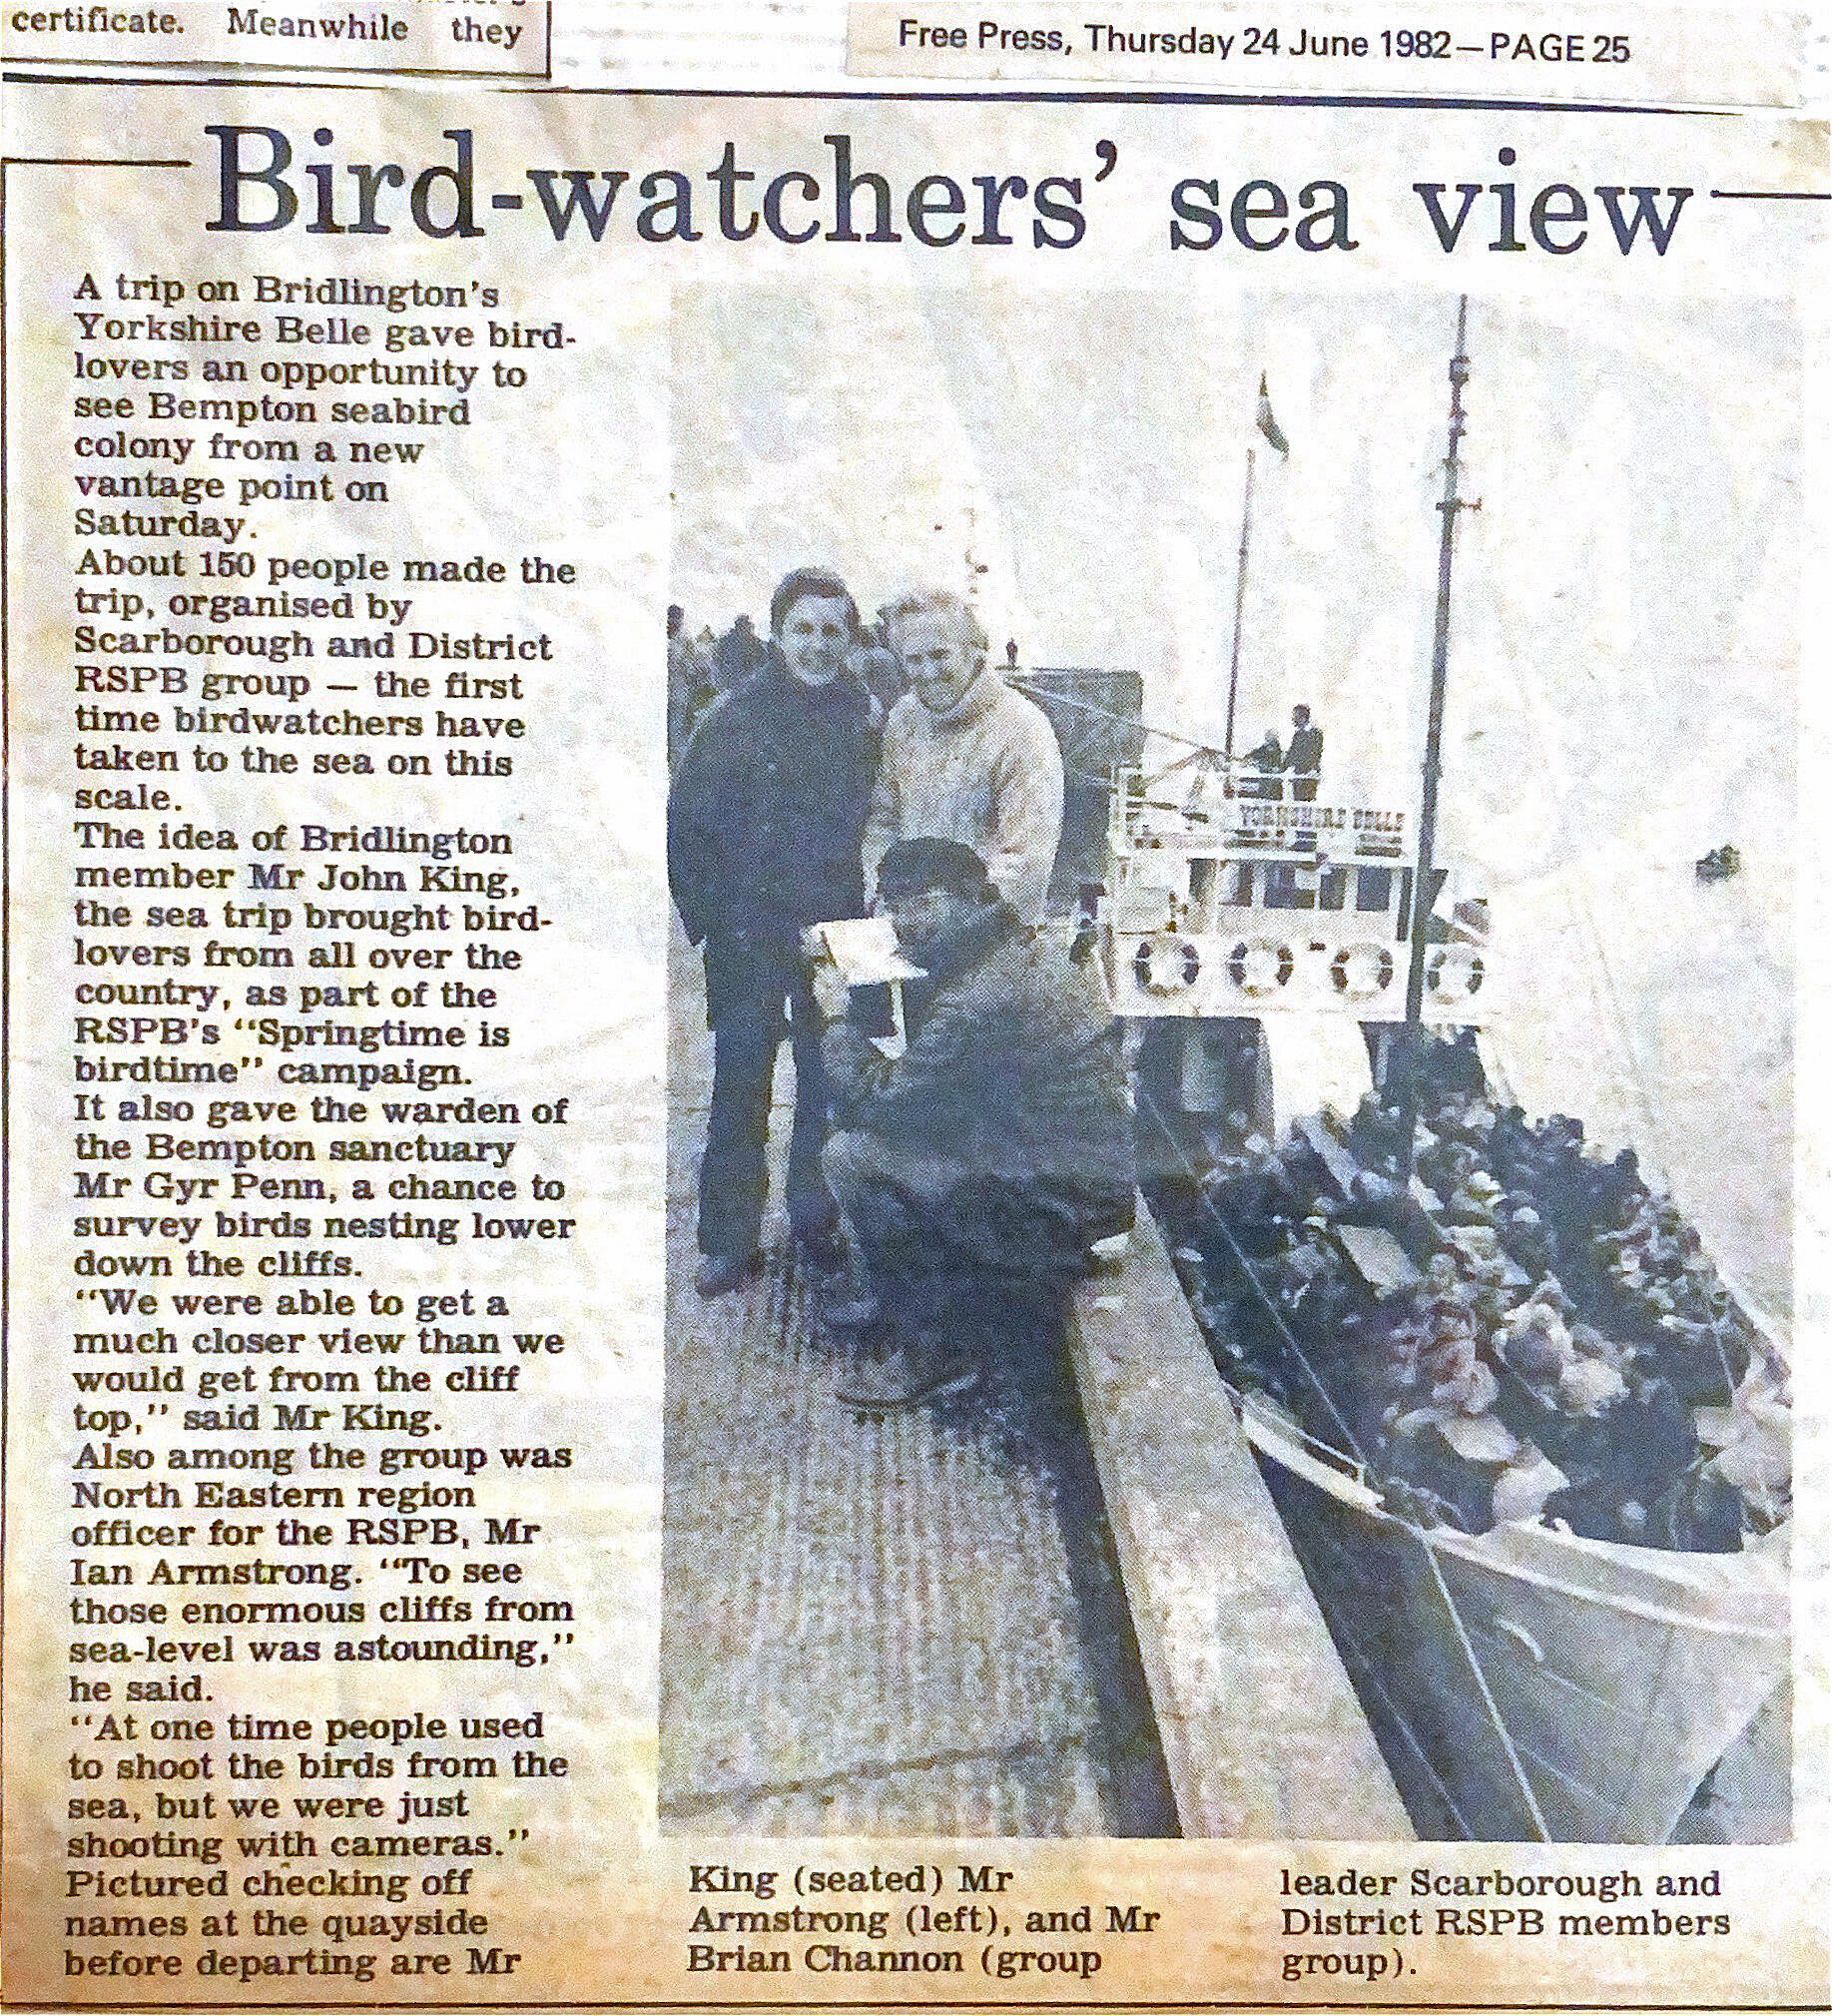 Bird-watchers' sea view - newspaper clipping.jpg